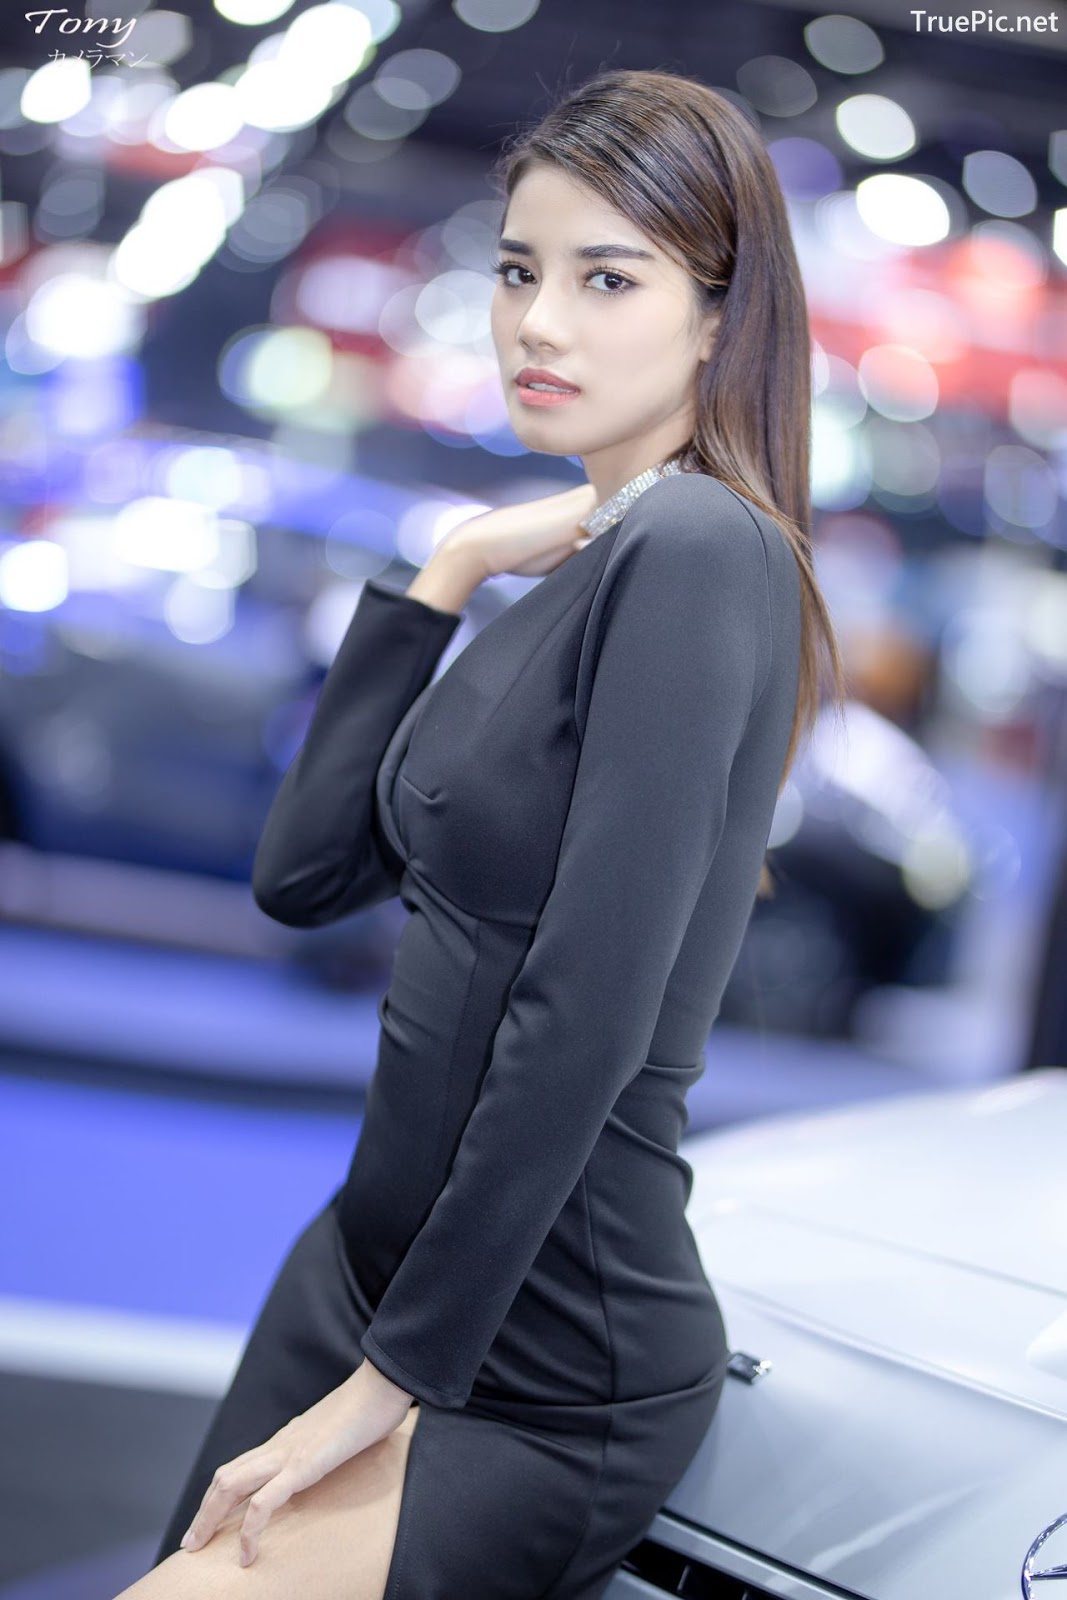 Image-Thailand-Hot-Model-Thai-Racing-Girl-At-Big-Motor-2018-TruePic.net- Picture-70